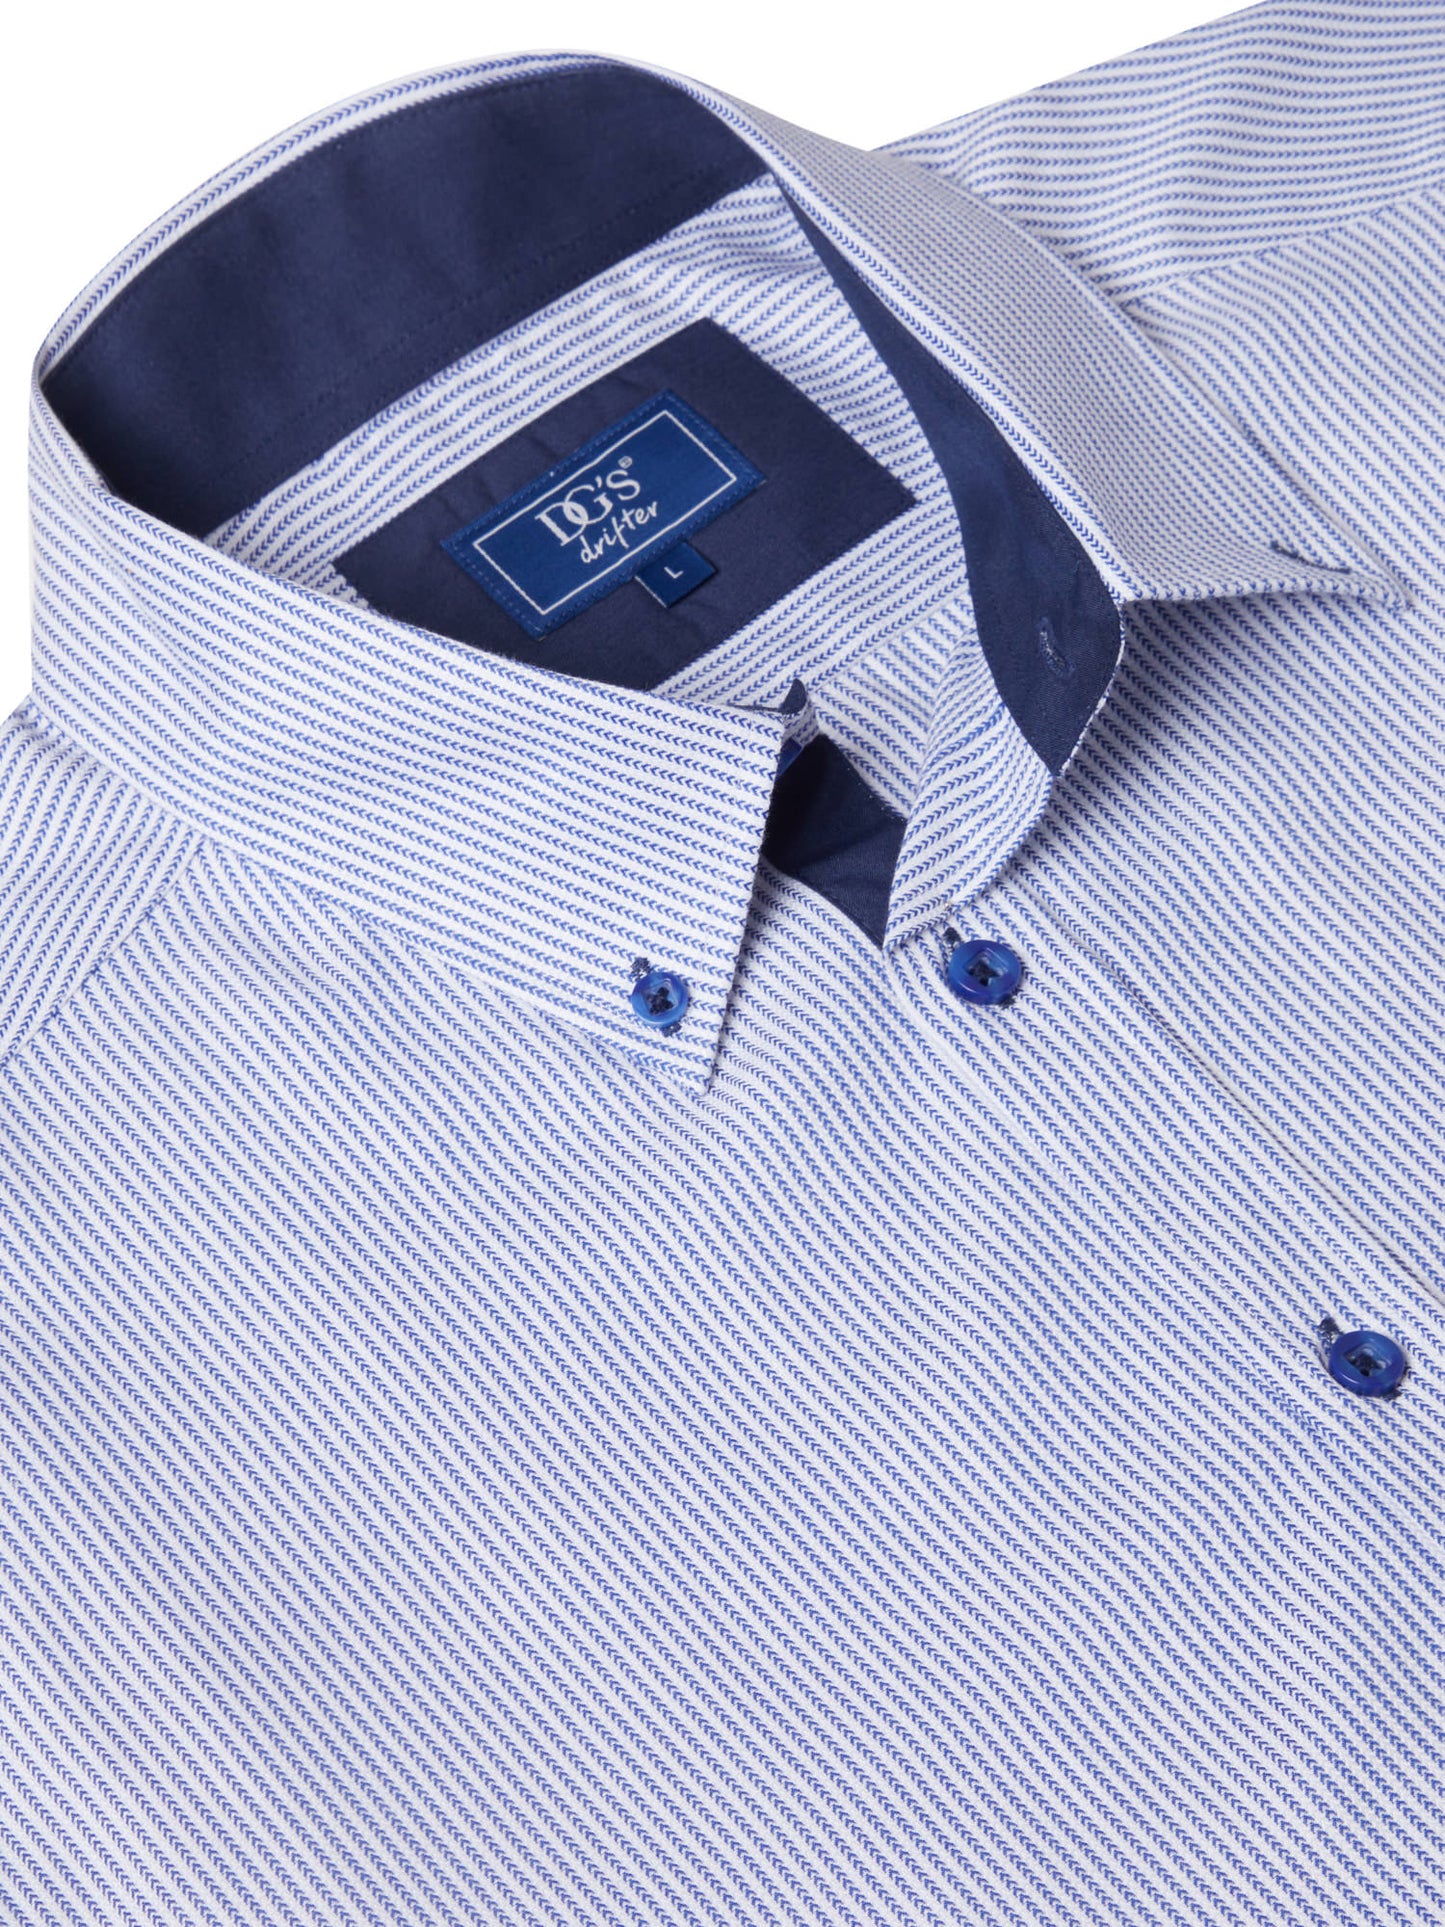 Cotton-Rich Button-Down Long-Sleeve Shirt - Blue Stripe